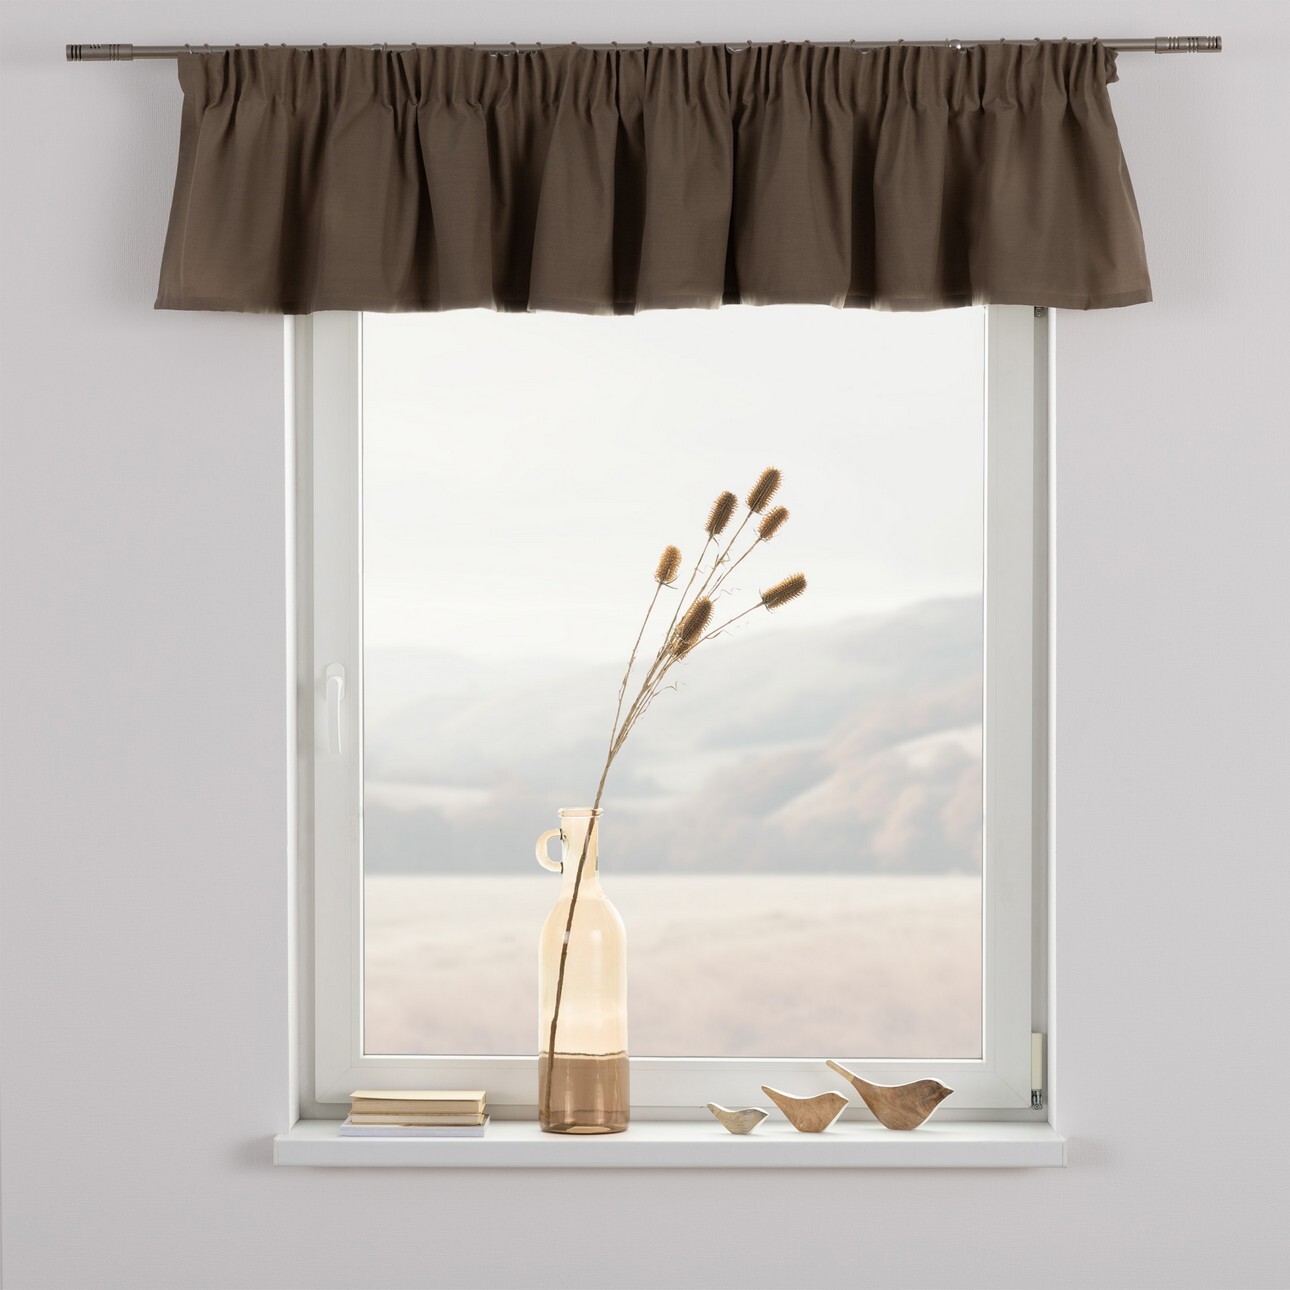 Kurzgardine mit Kräuselband, mocca, 130 x 40 cm, Cotton Panama (702-02) günstig online kaufen